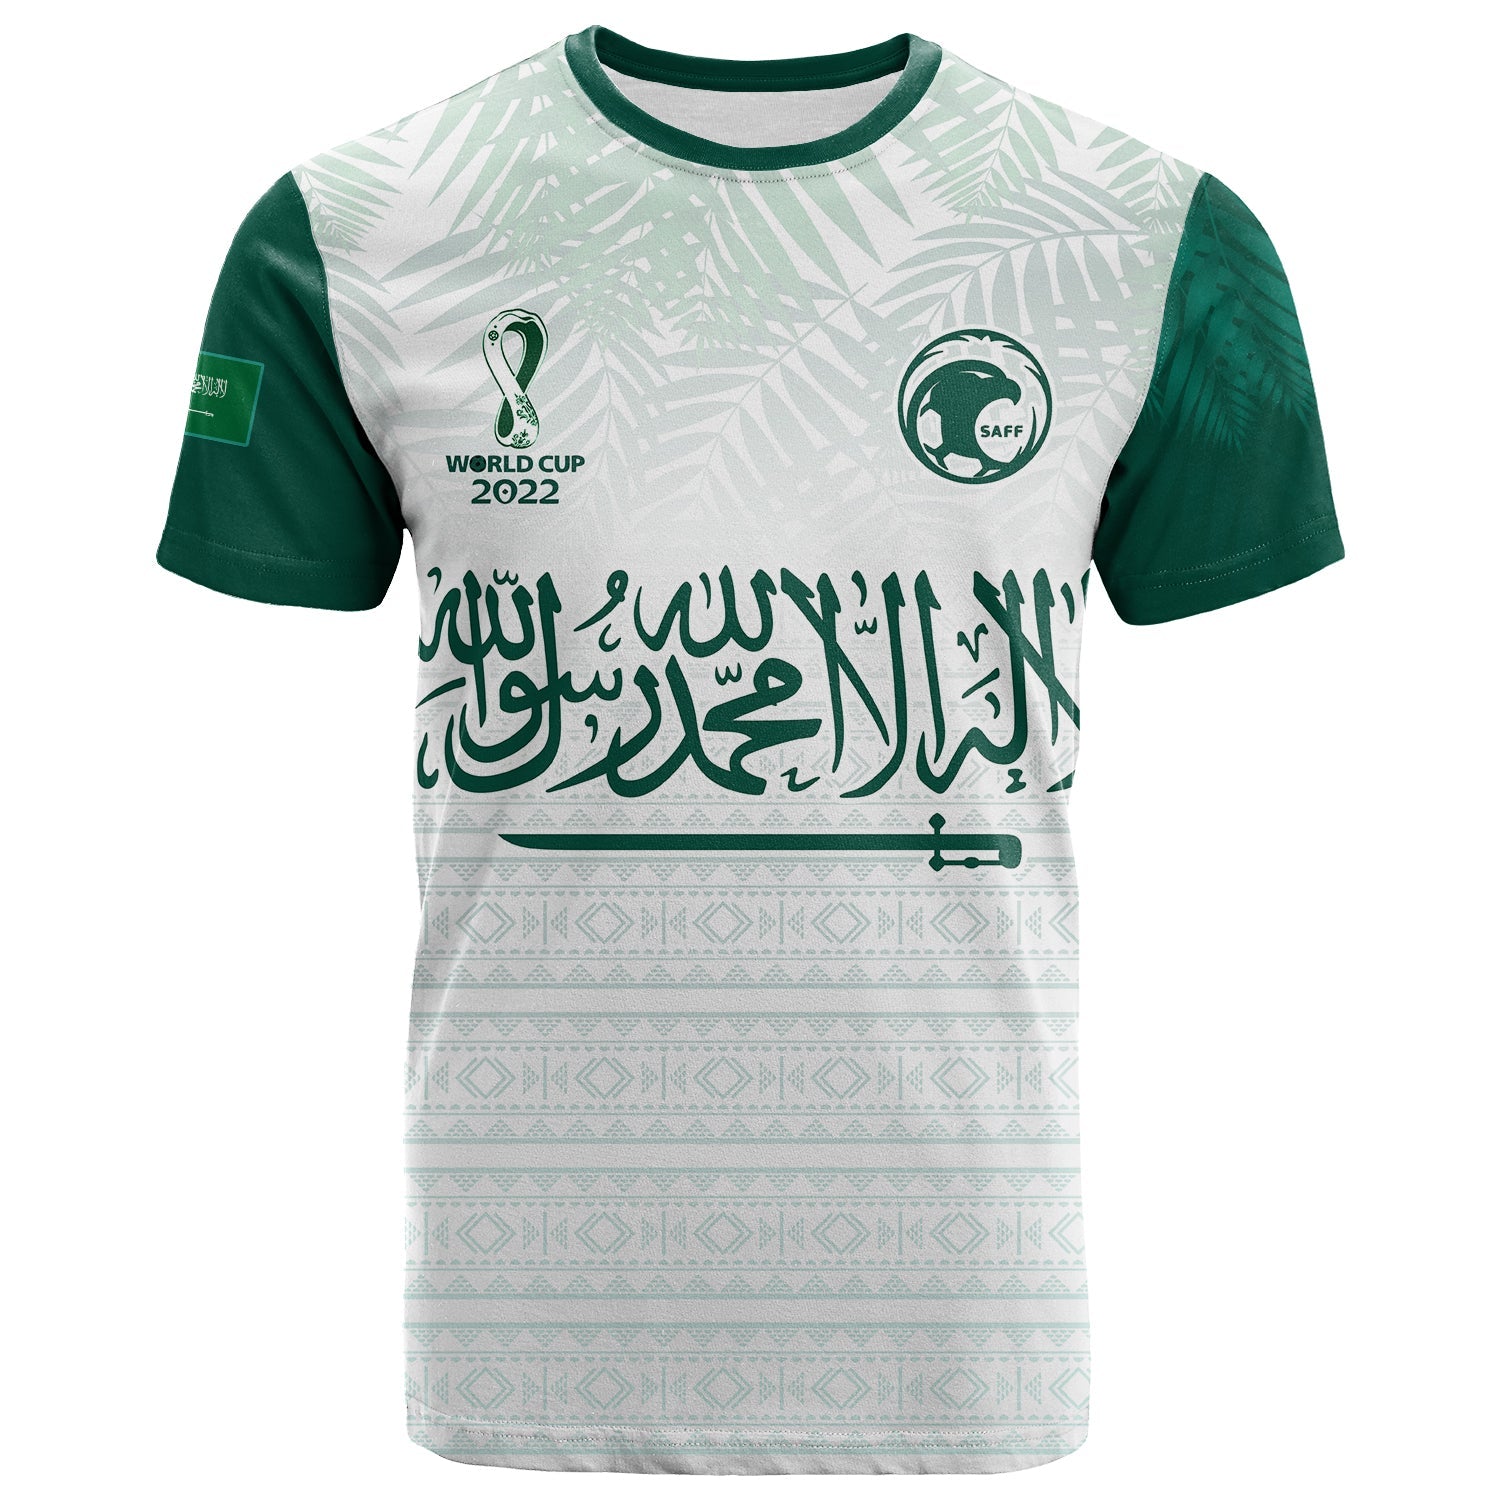 saudi-arabia-football-t-shirt-ksa-proud-arabia-pattern-white-special